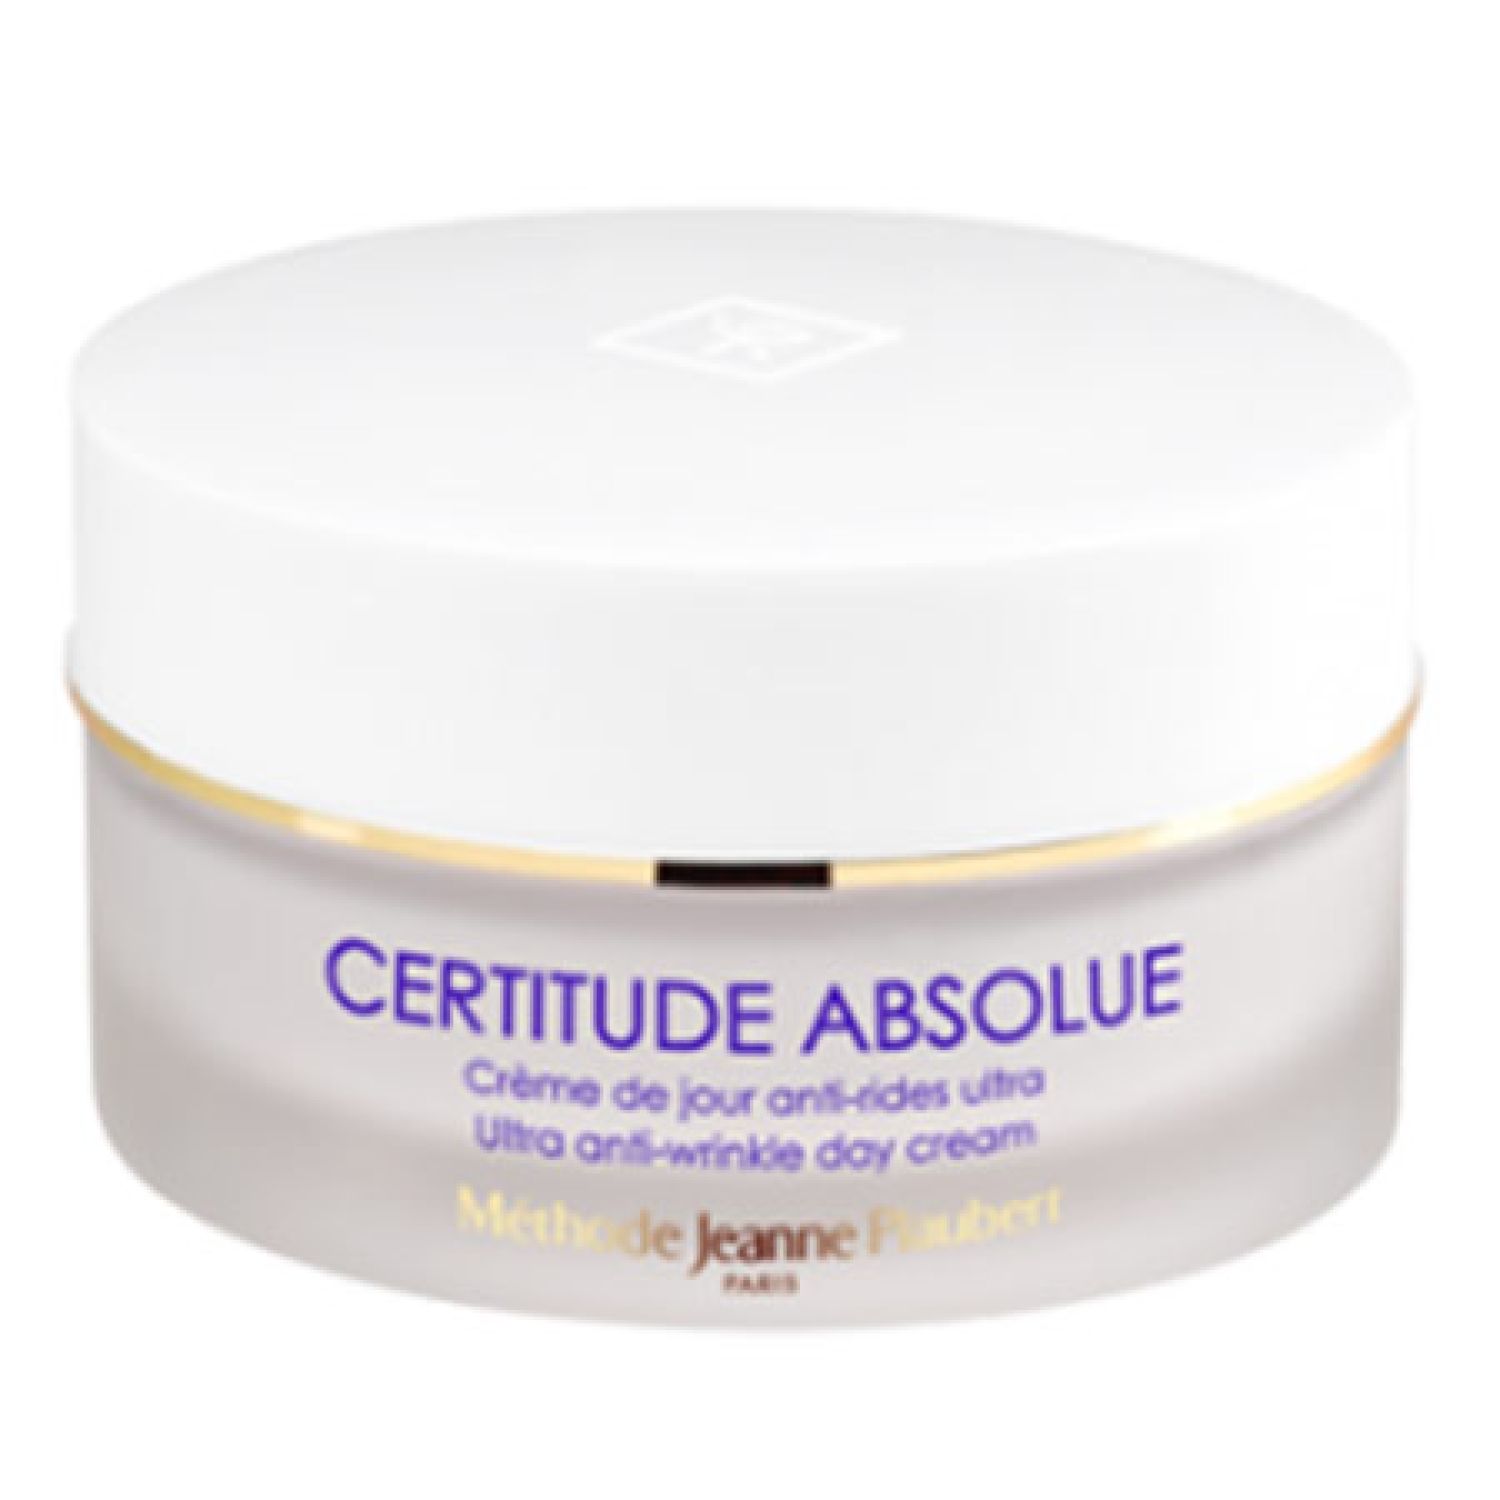 Jeanne Piaubert Certitude Absolue Ultra Anti Wrinkle Day Cream